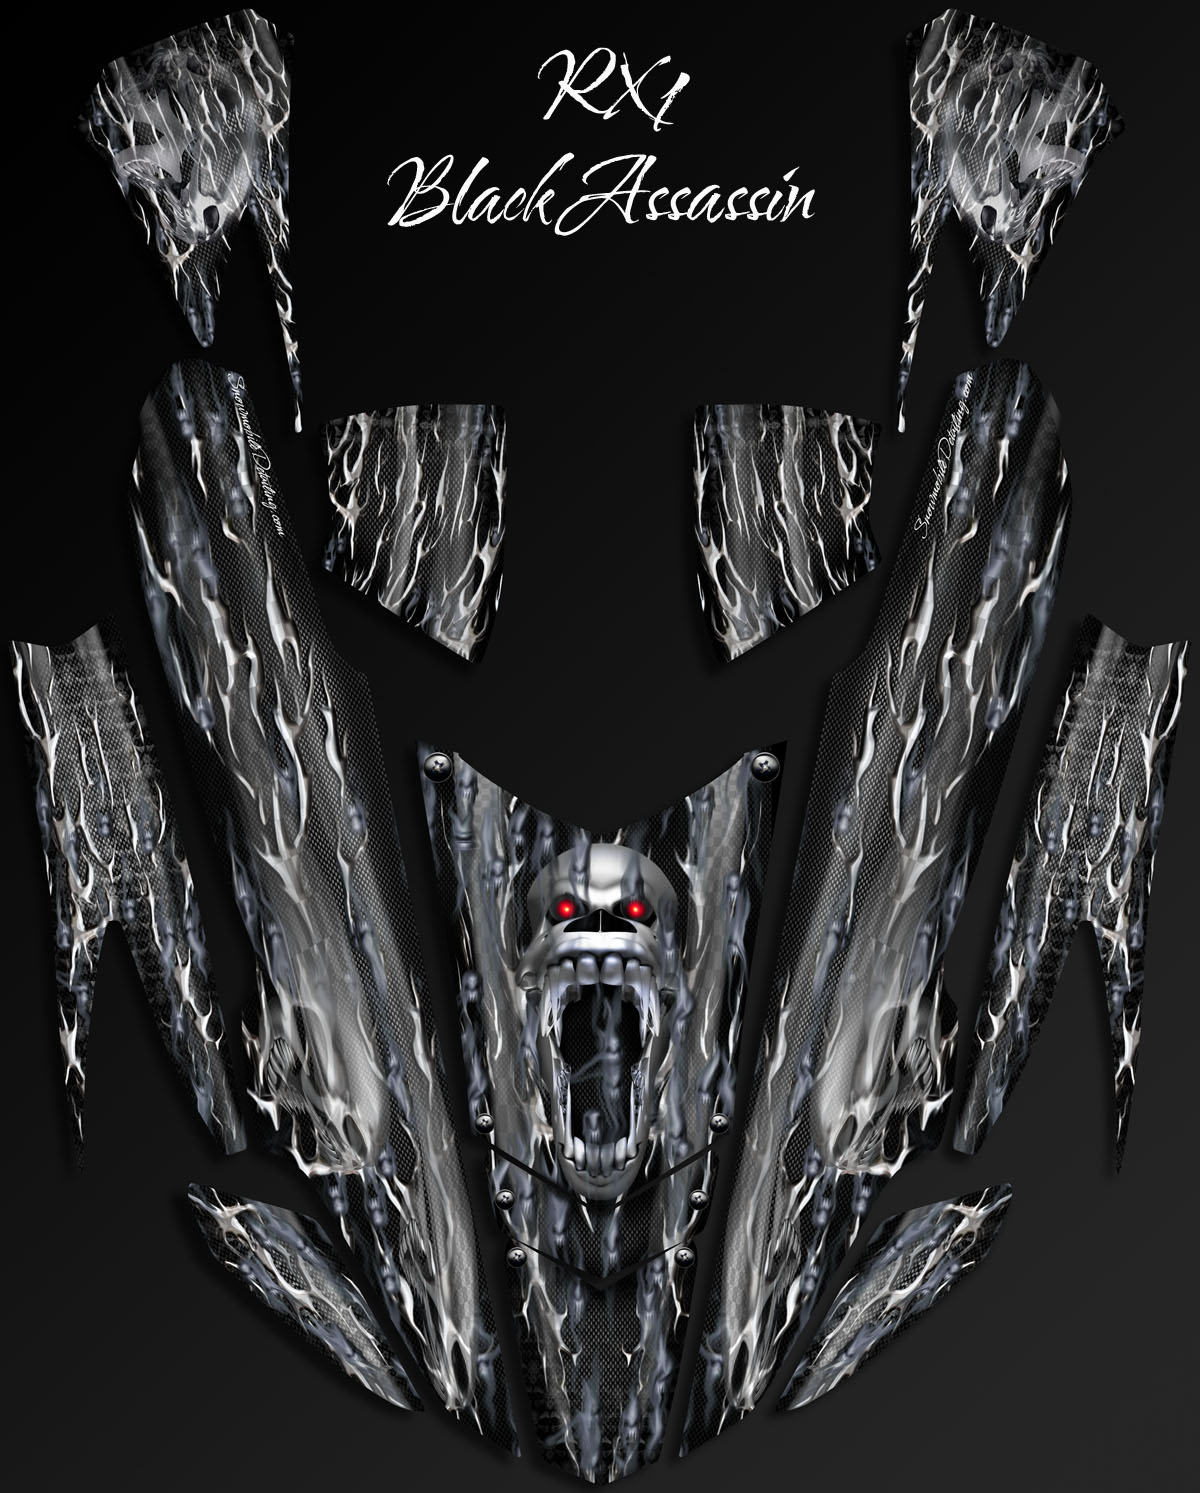 Black Assassin yamaha RX1 wrap